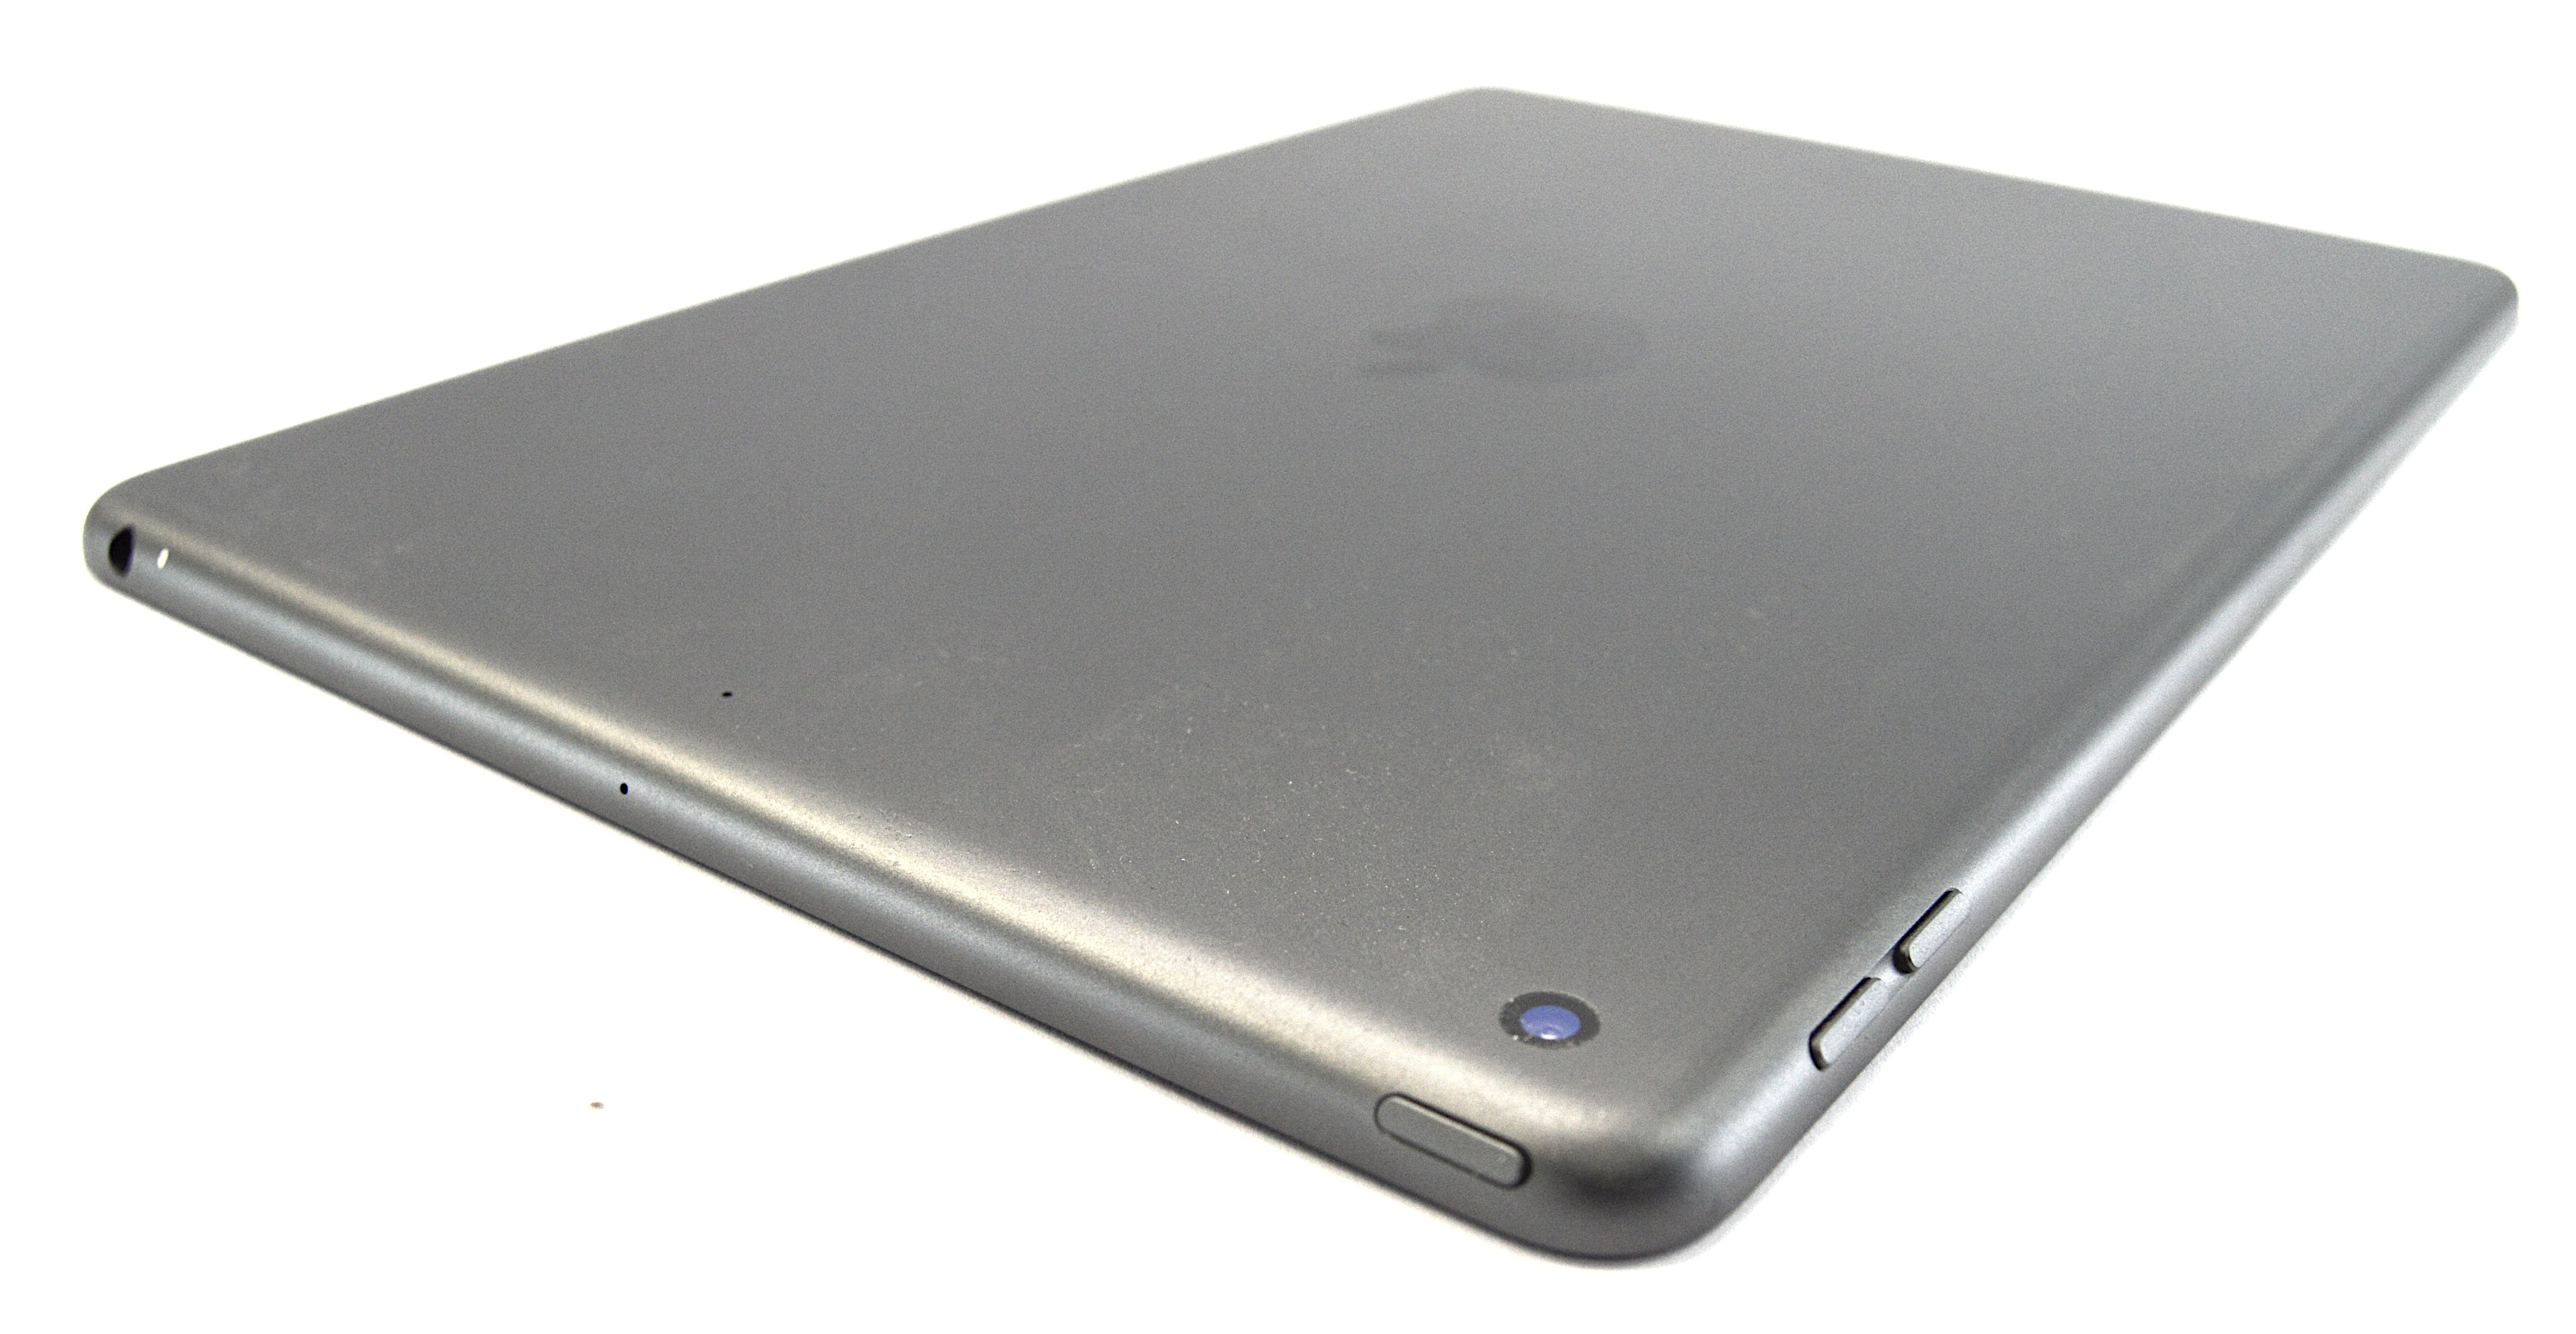 Apple iPad 7th Generation Tablet, 32GB, WiFi,  A2197, Space Grey